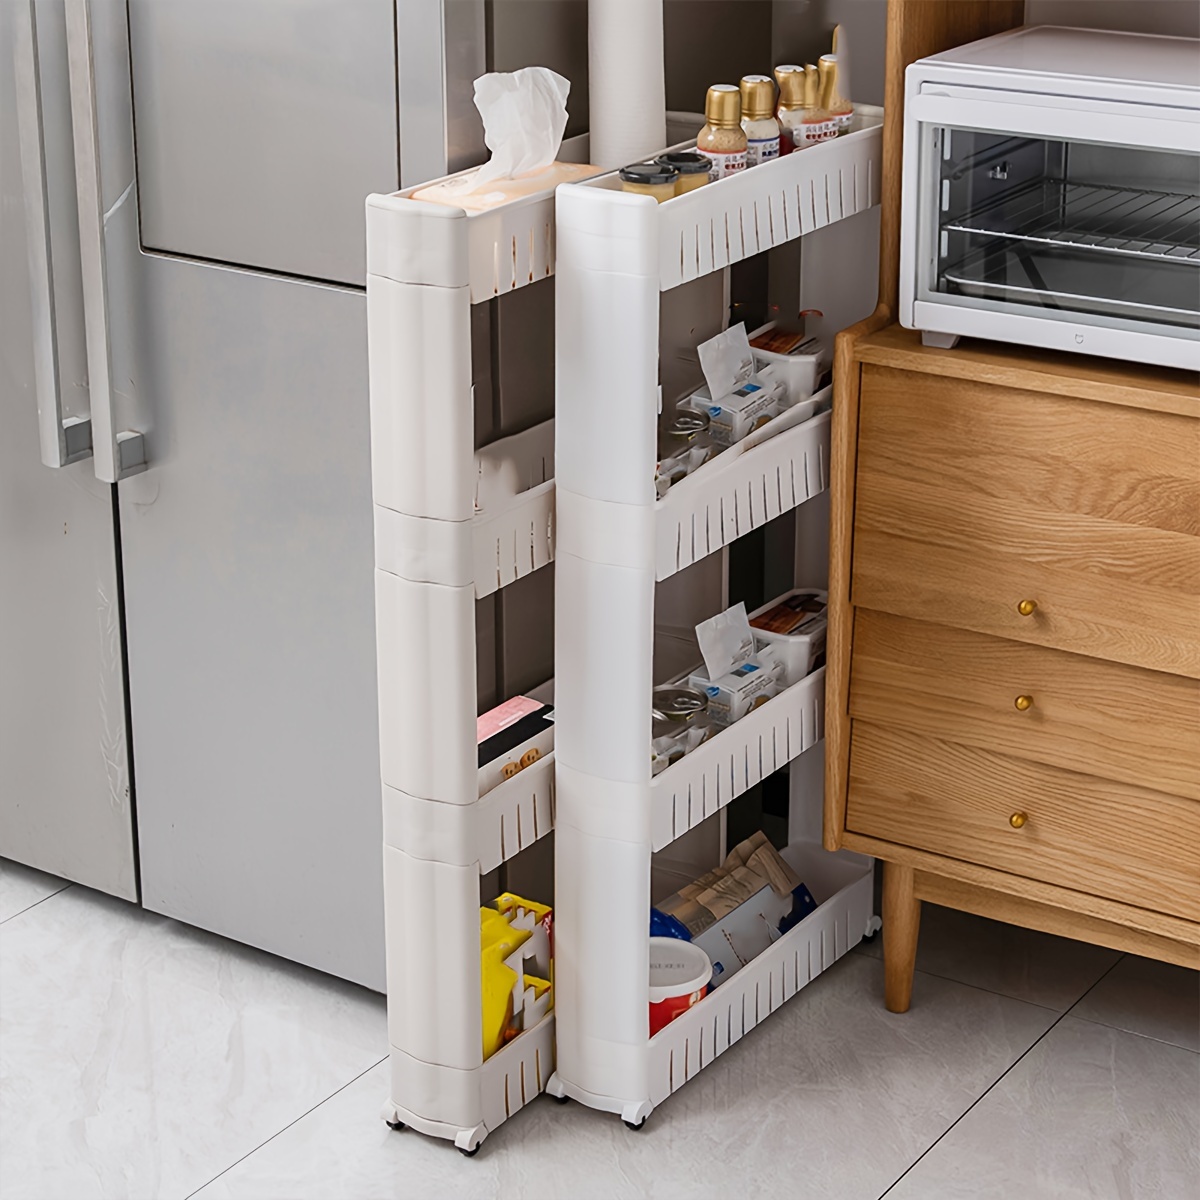 Kitchen Ultra-narrow Gap Storage Rack Fridge Side Shelf Drawer